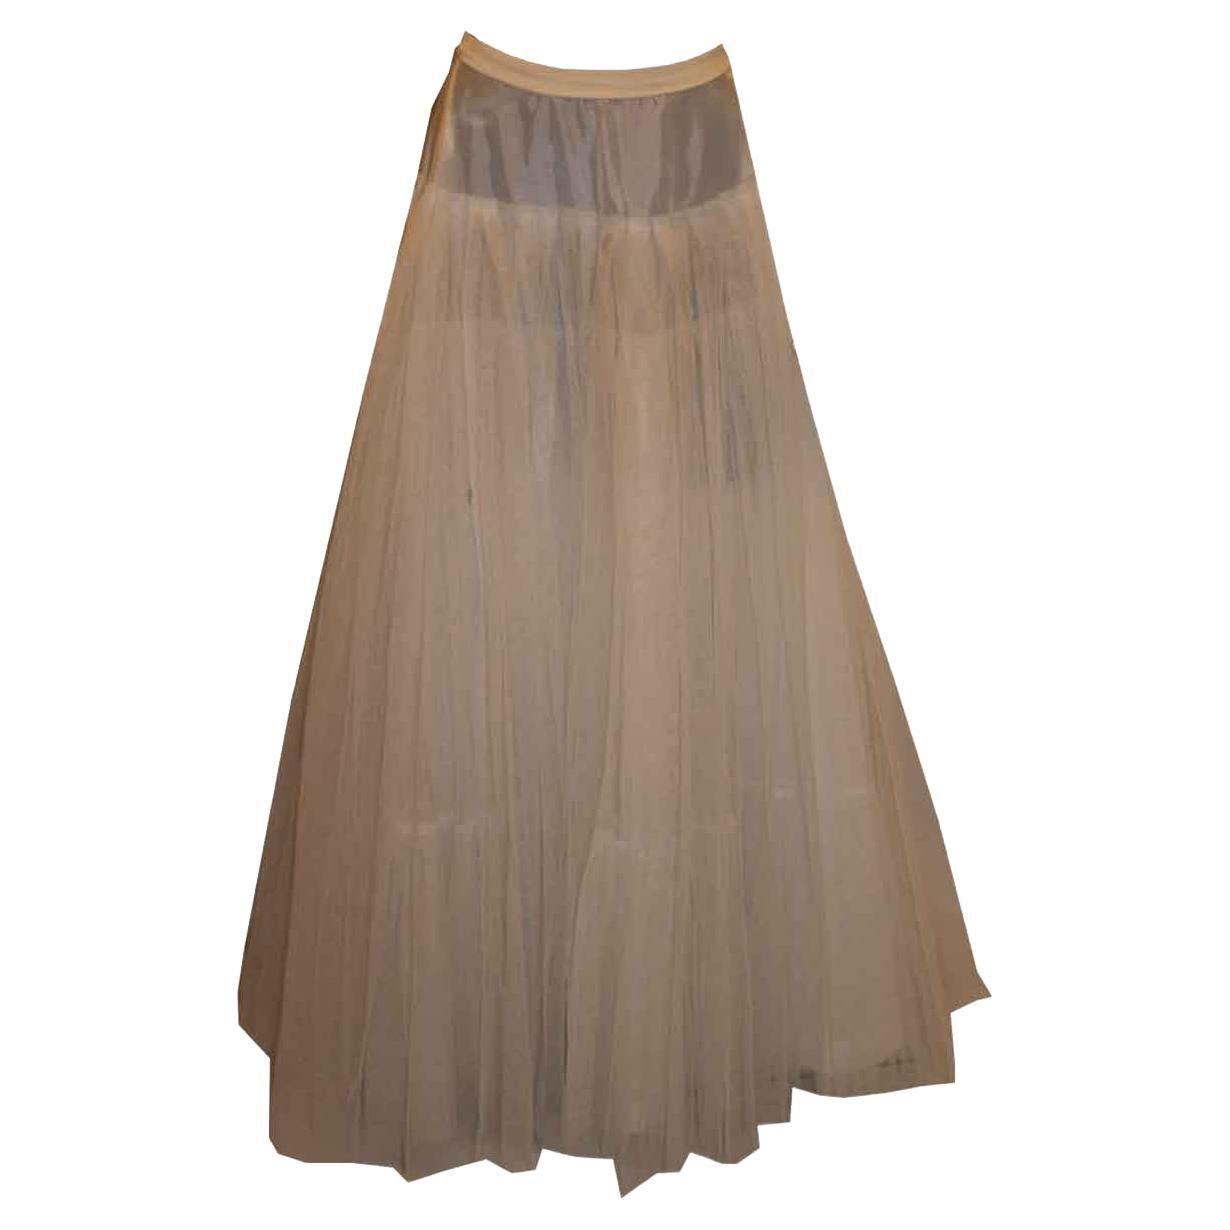 Merveilleux Petticoat/Skirt vintage